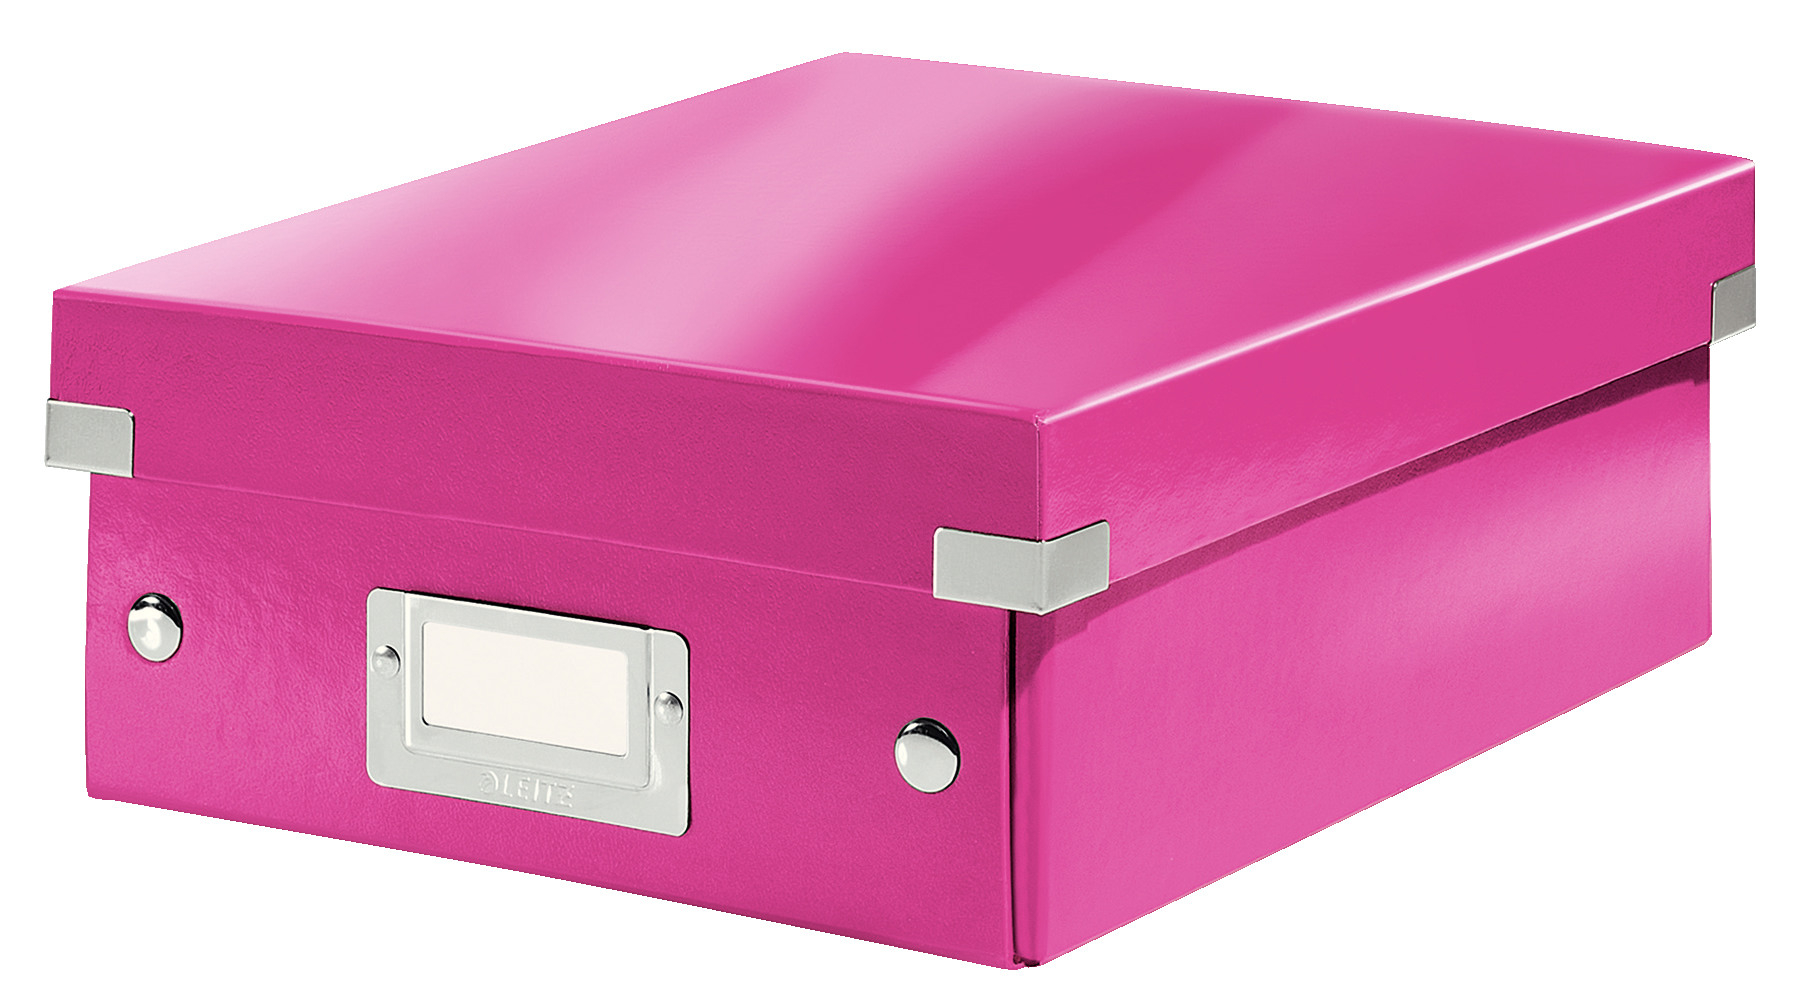 LEITZ Click&Store Box 220x100x285mm 60570023 pink